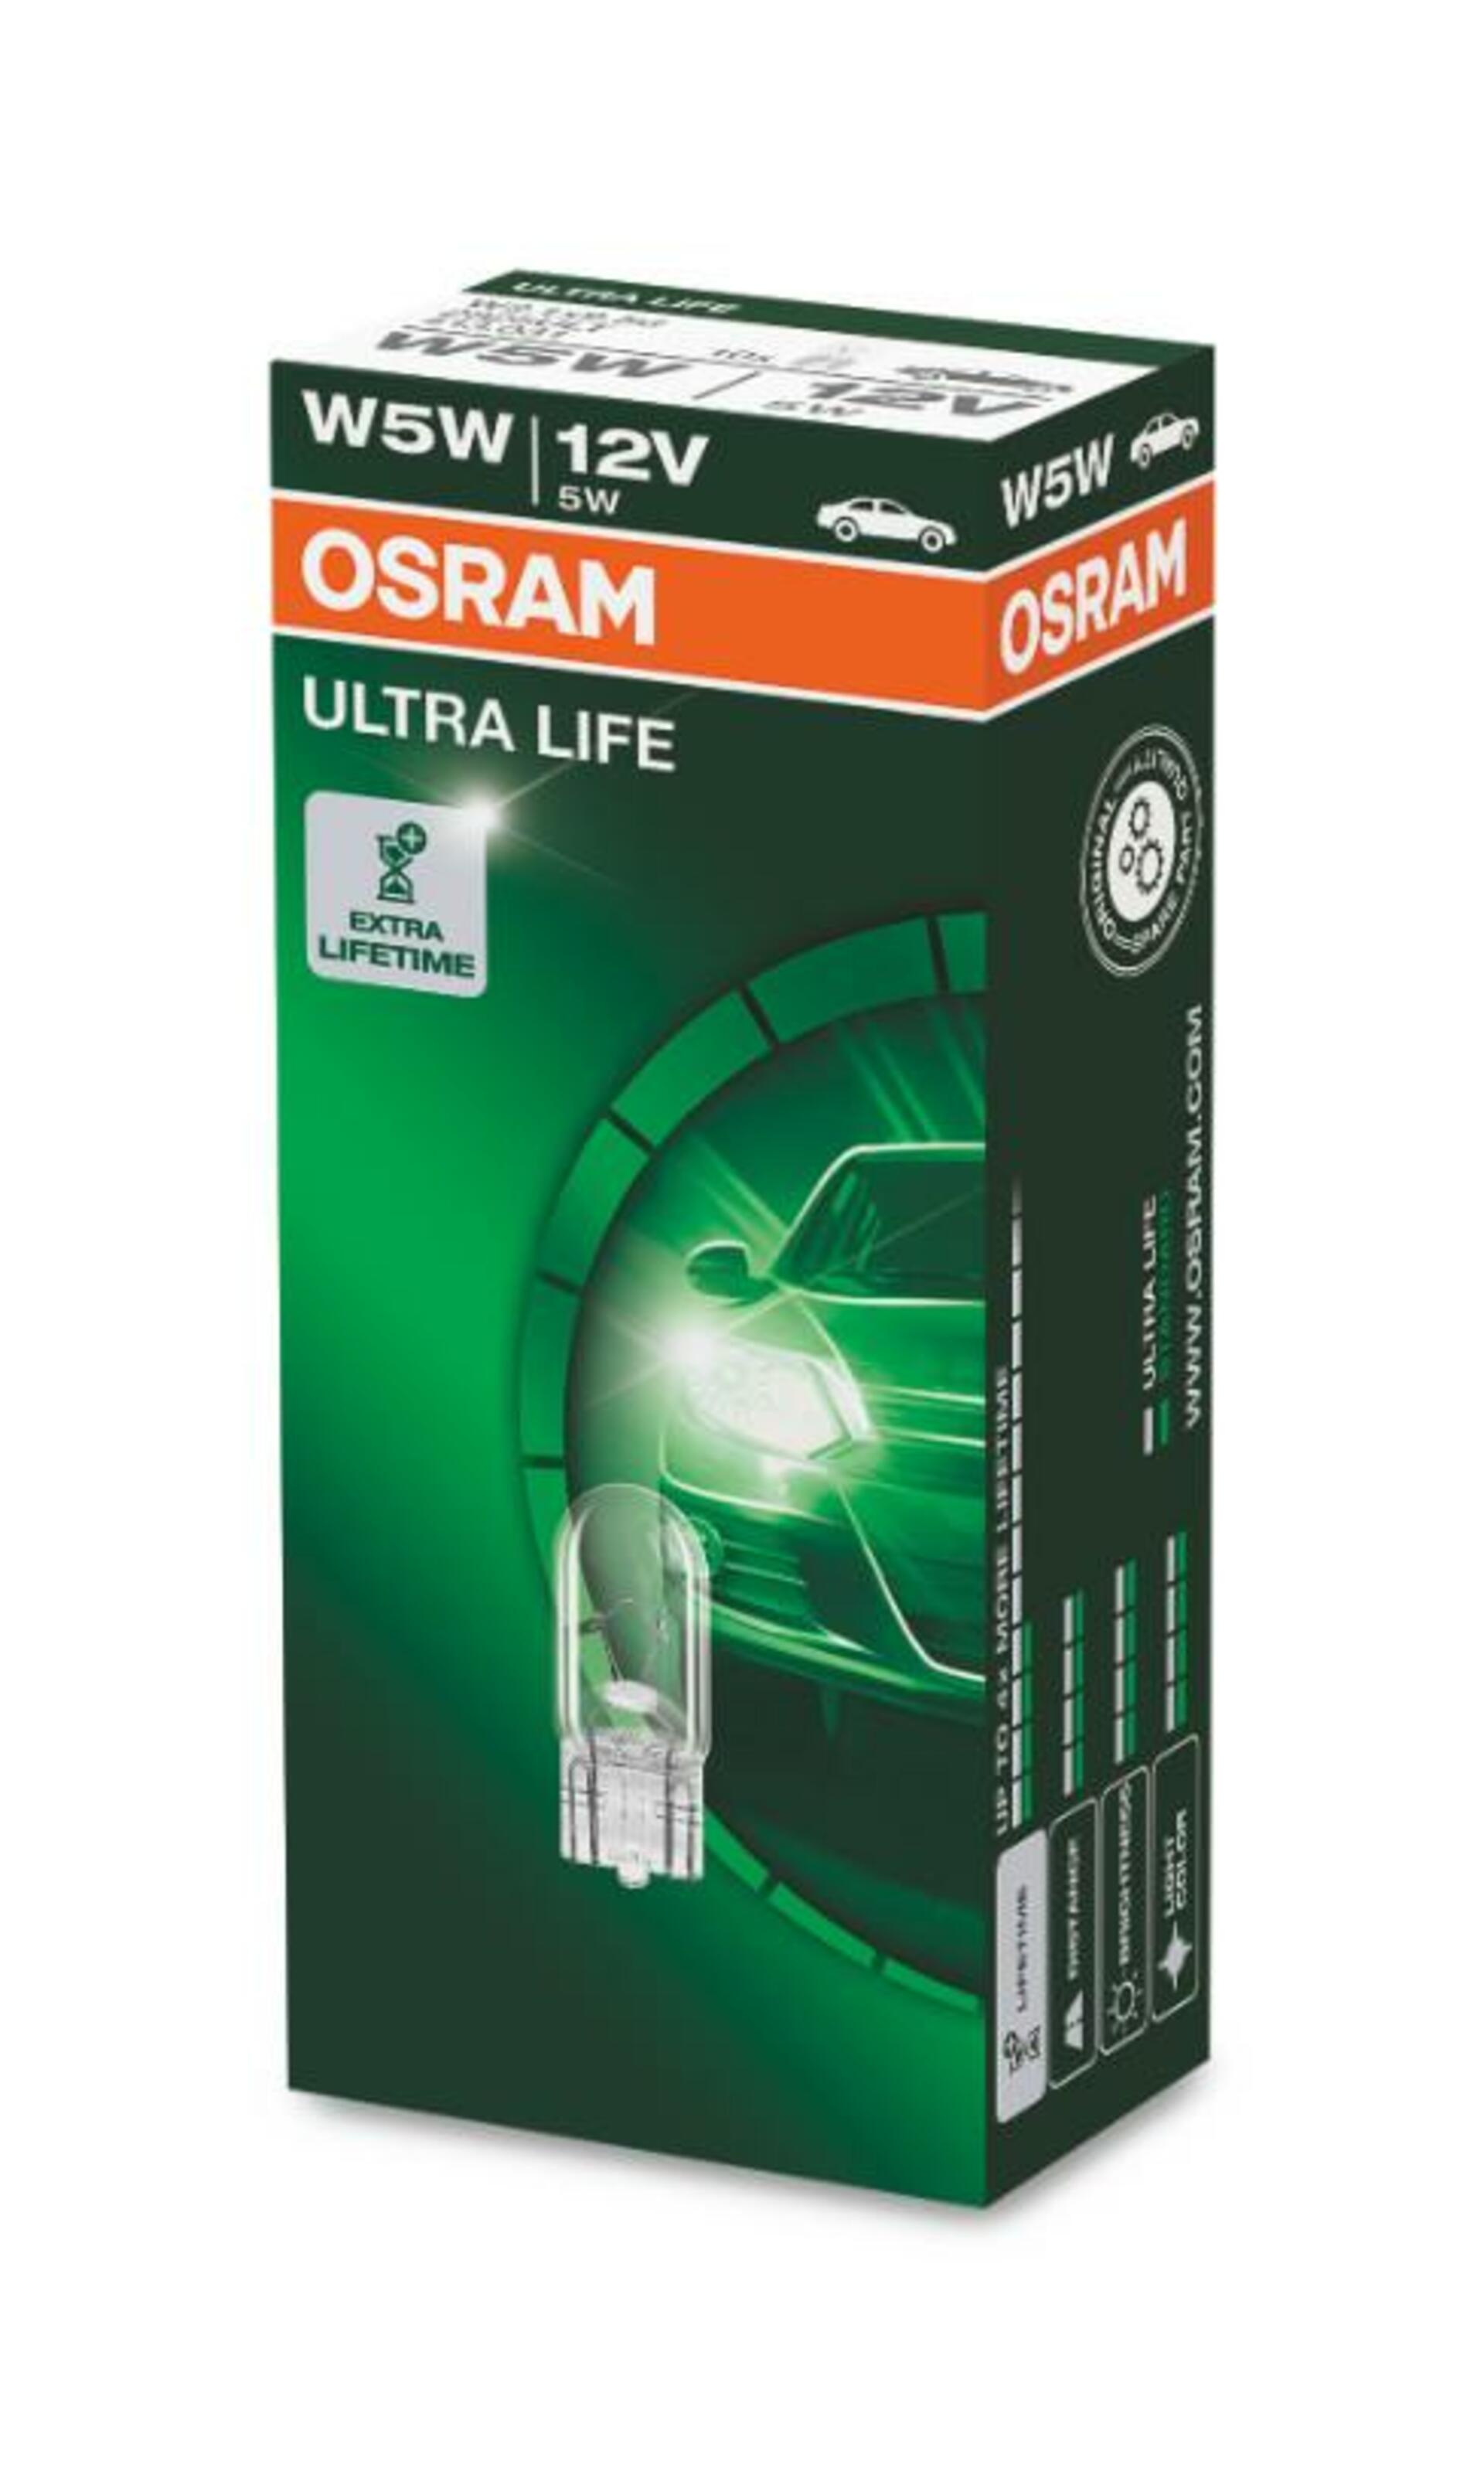 OSRAM W5W ULTRA LIFE 2825ULT 12V